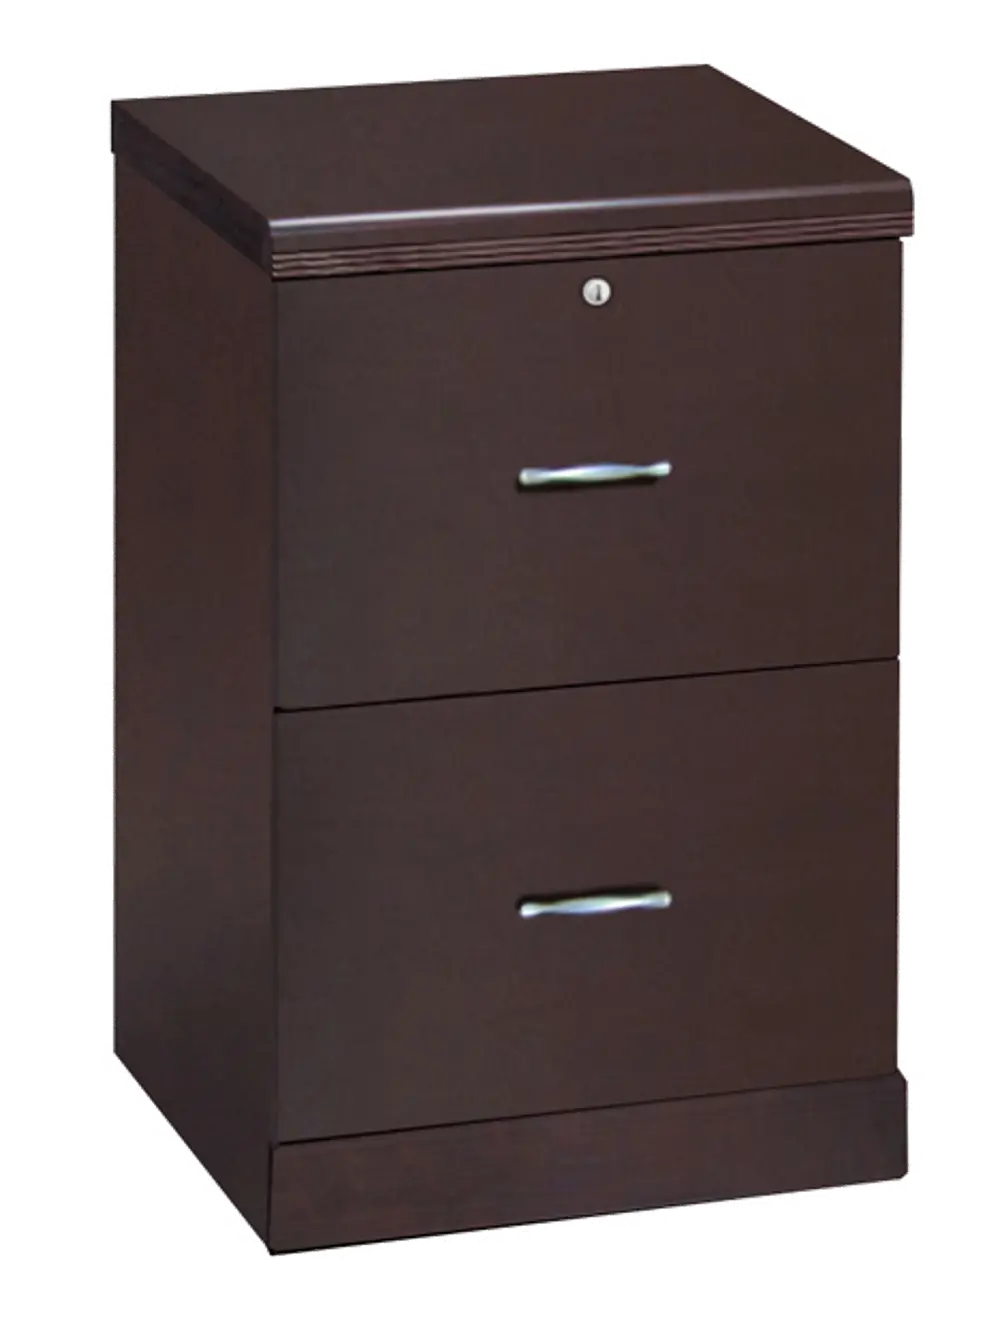 ZL8880-22VFU Espresso Brown 2 Drawer File Cabinet-1